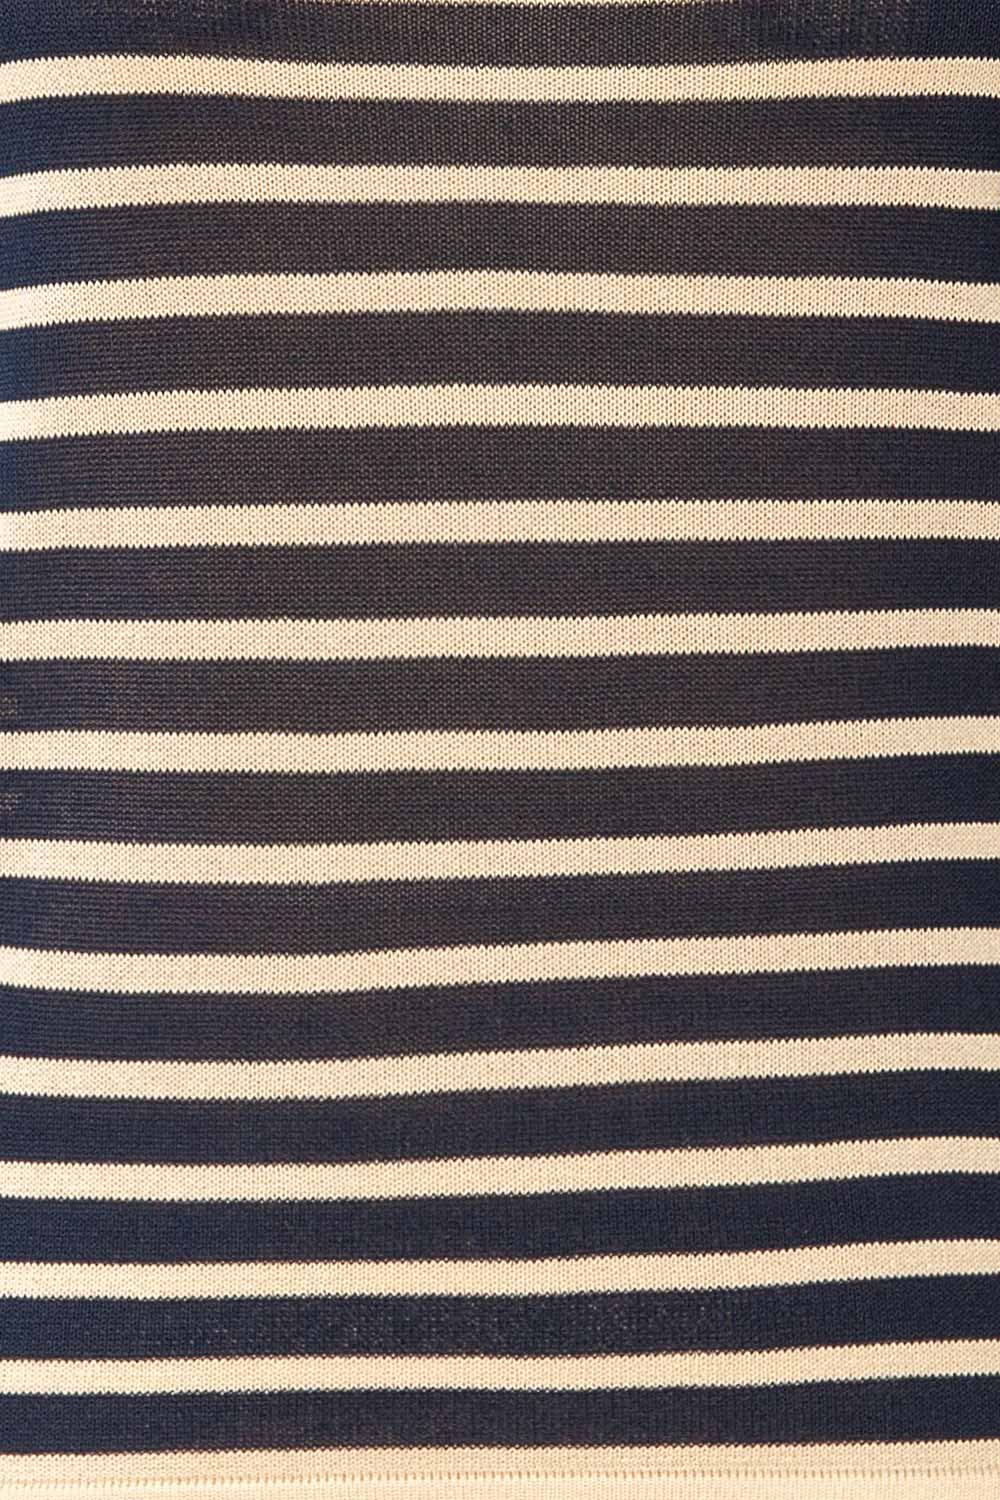 Gwanju Navy Striped Boat Neck Knit Top | La petite garçonne fabric 